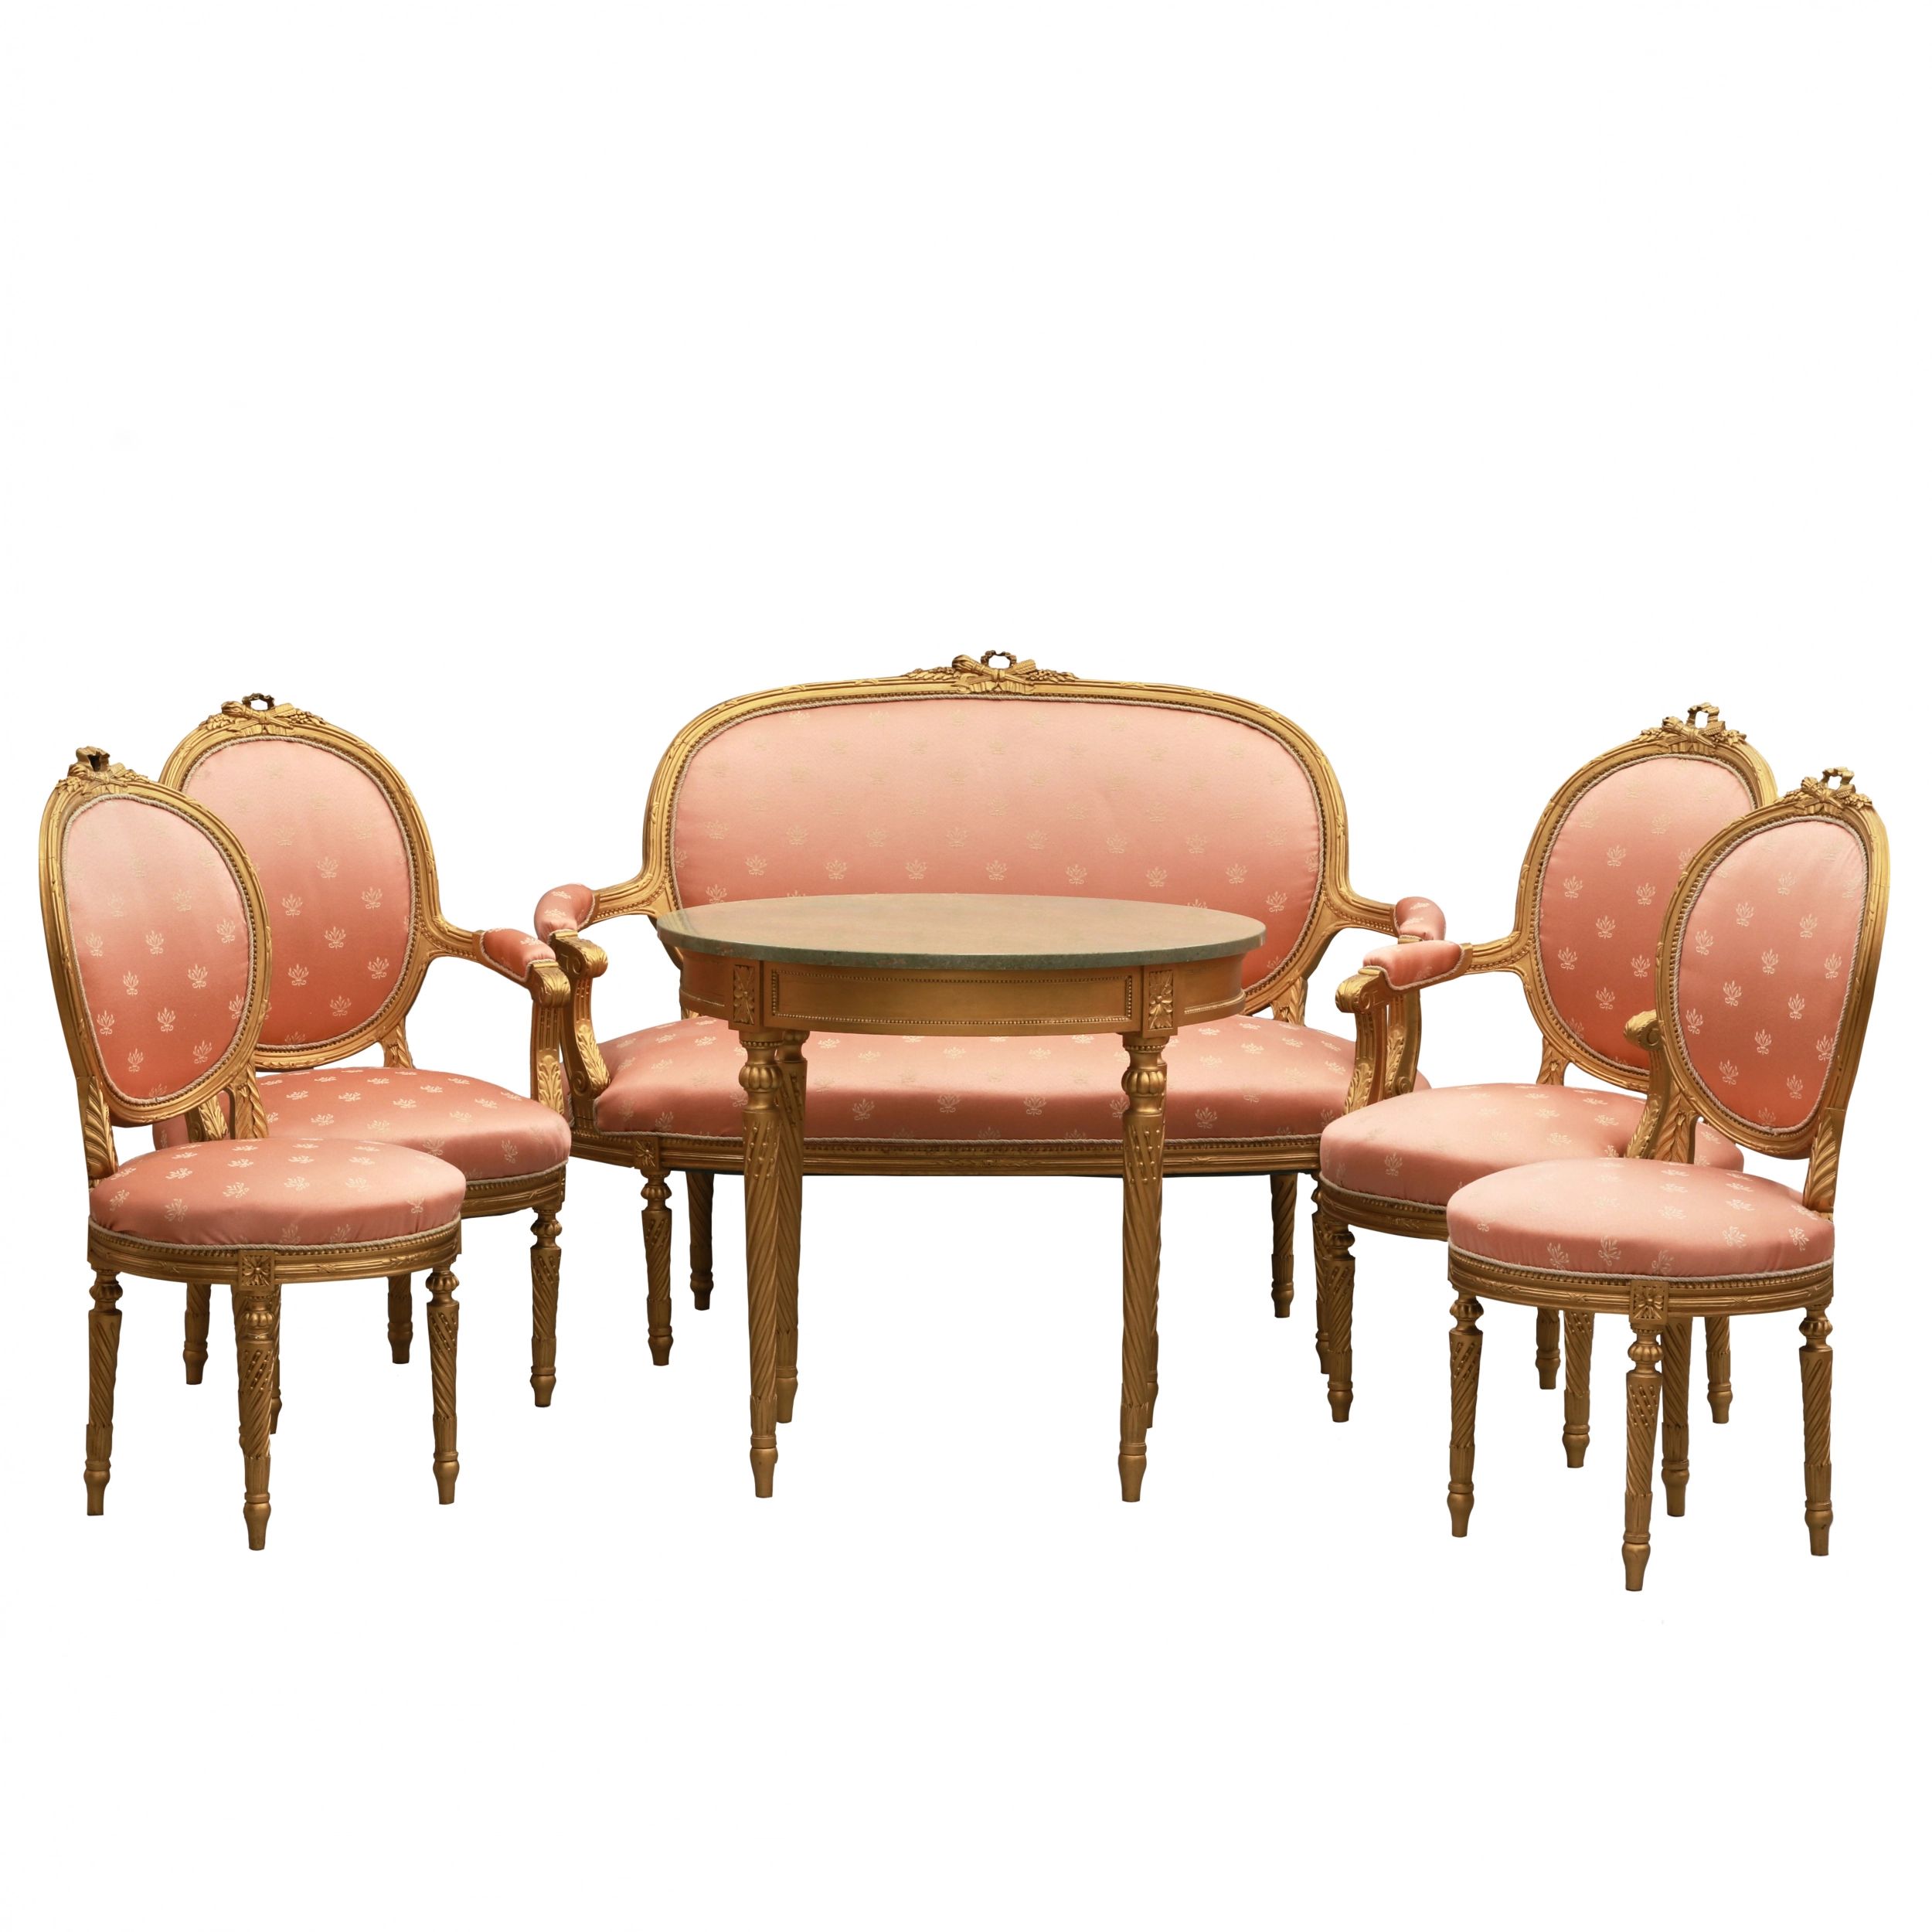 Furniture-set-consisting-of-8-pieces